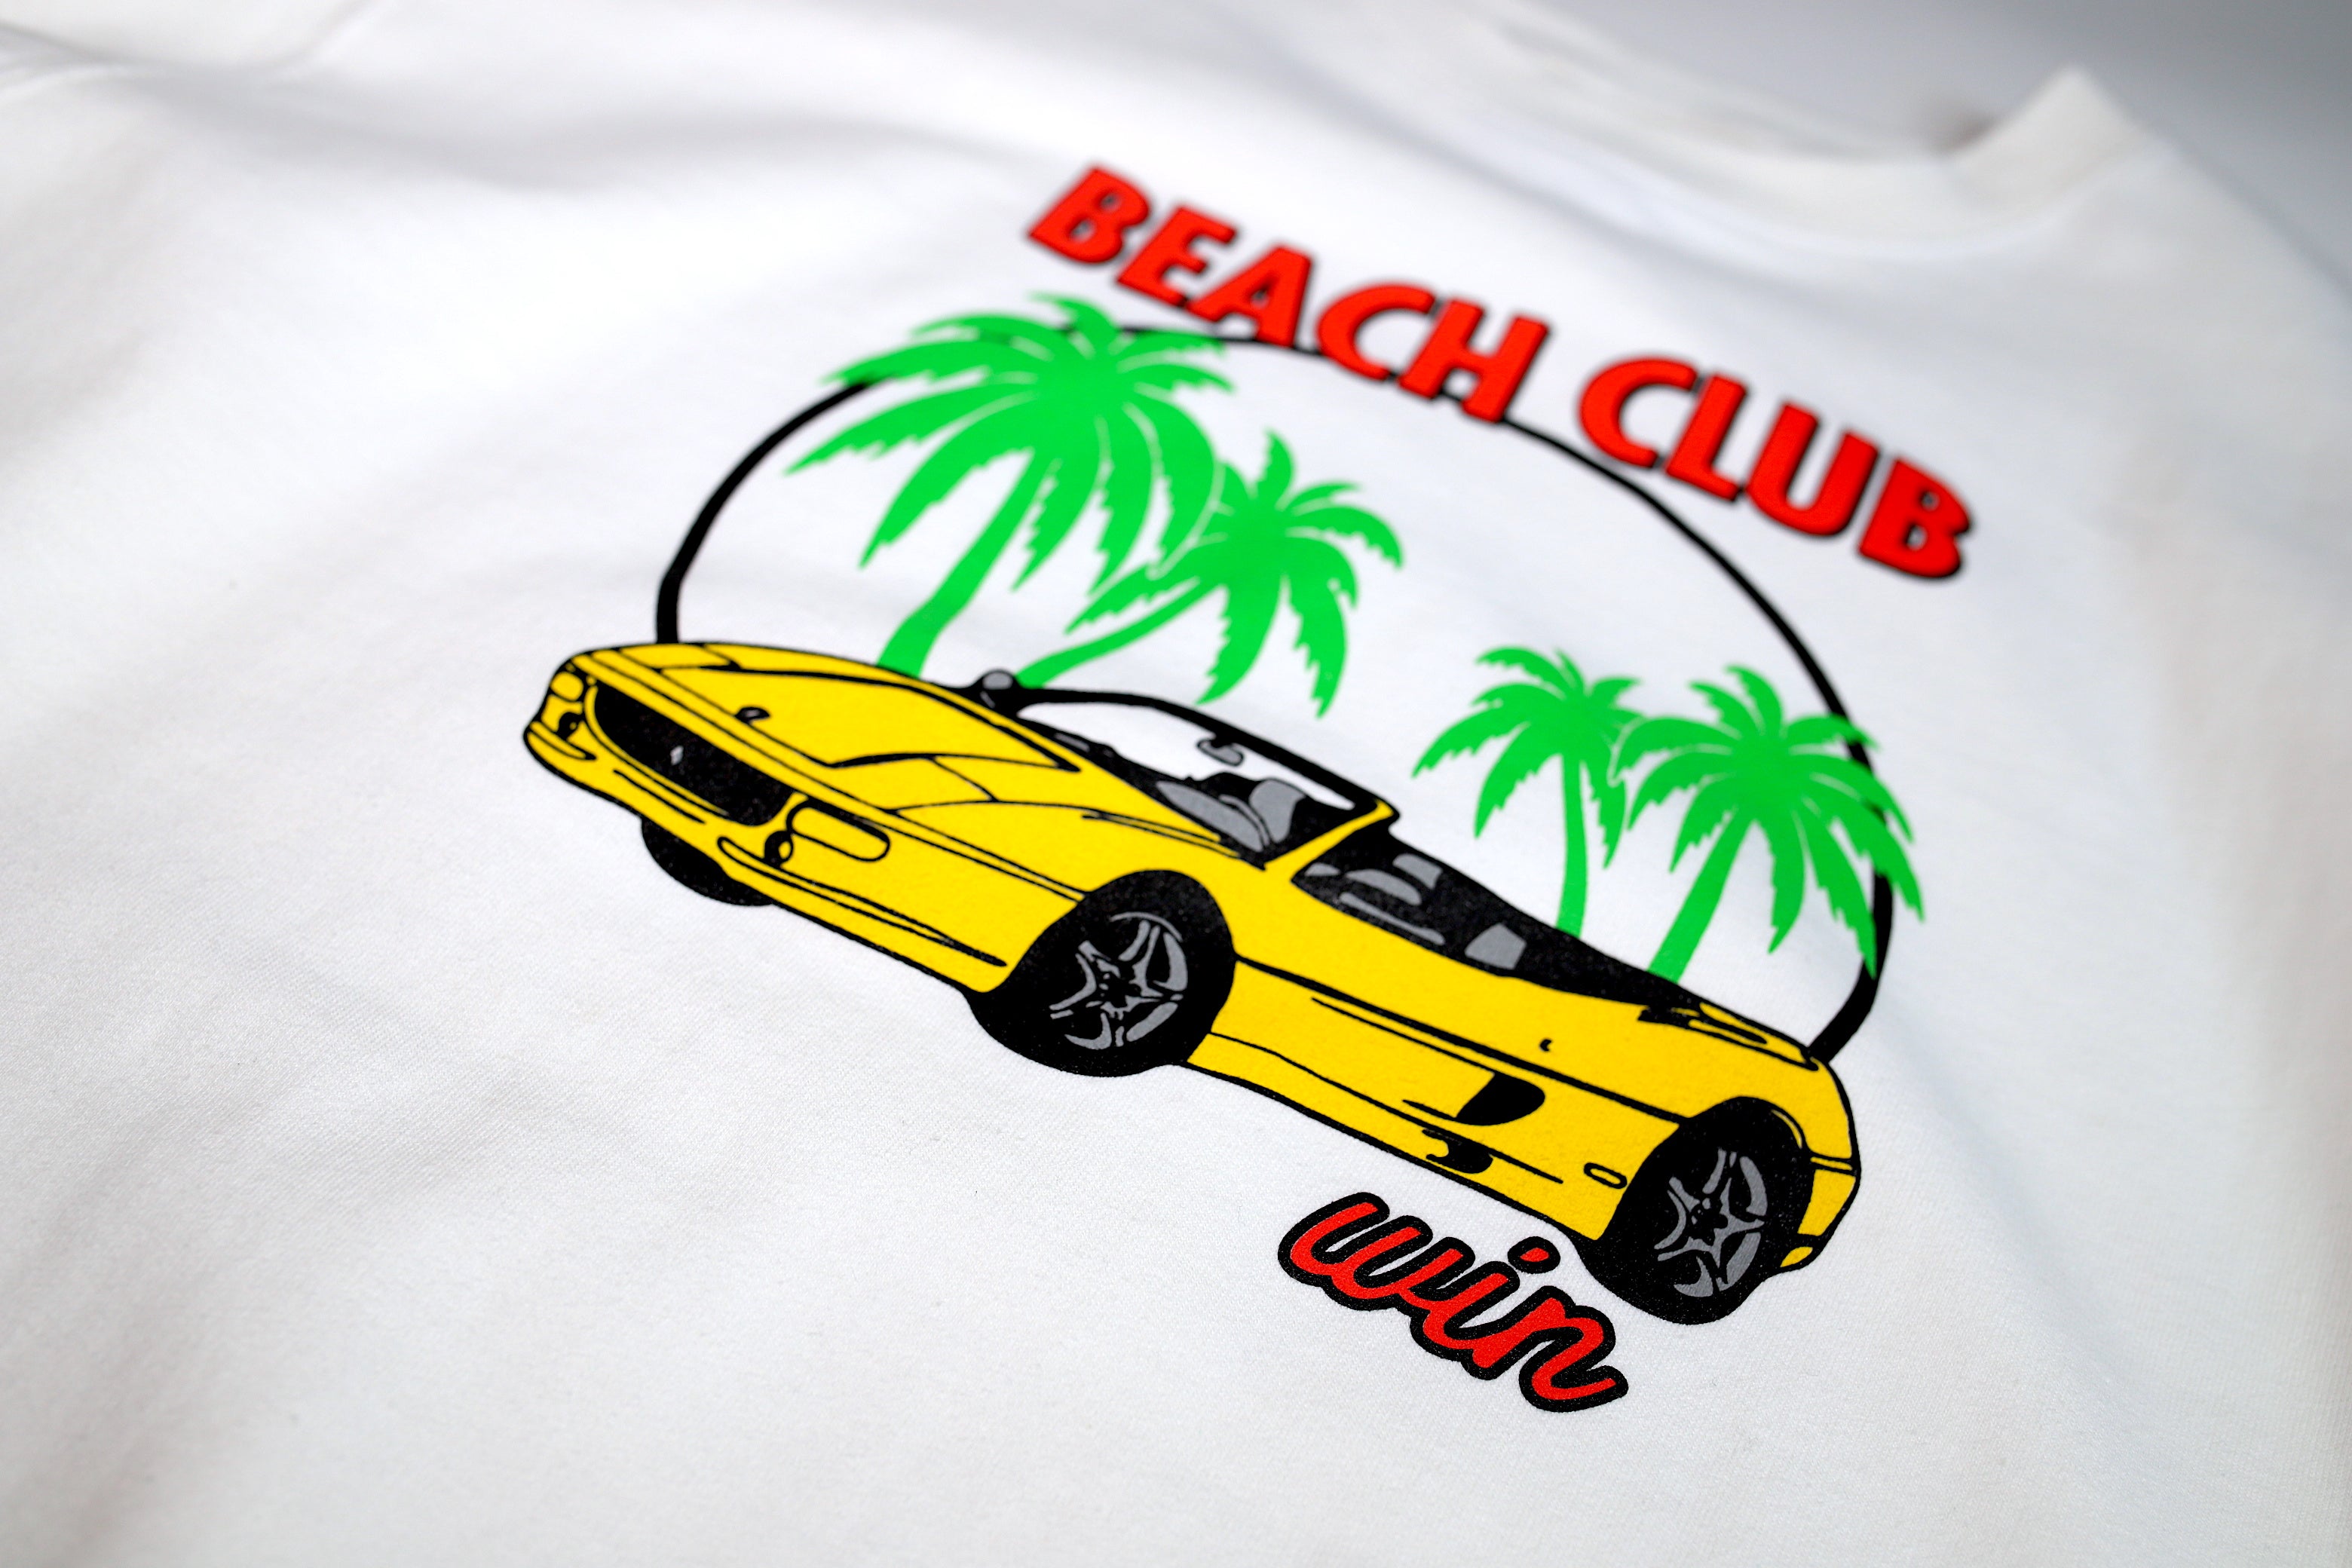 WIN "Beach Club" Crewneck Sweatshirt - White